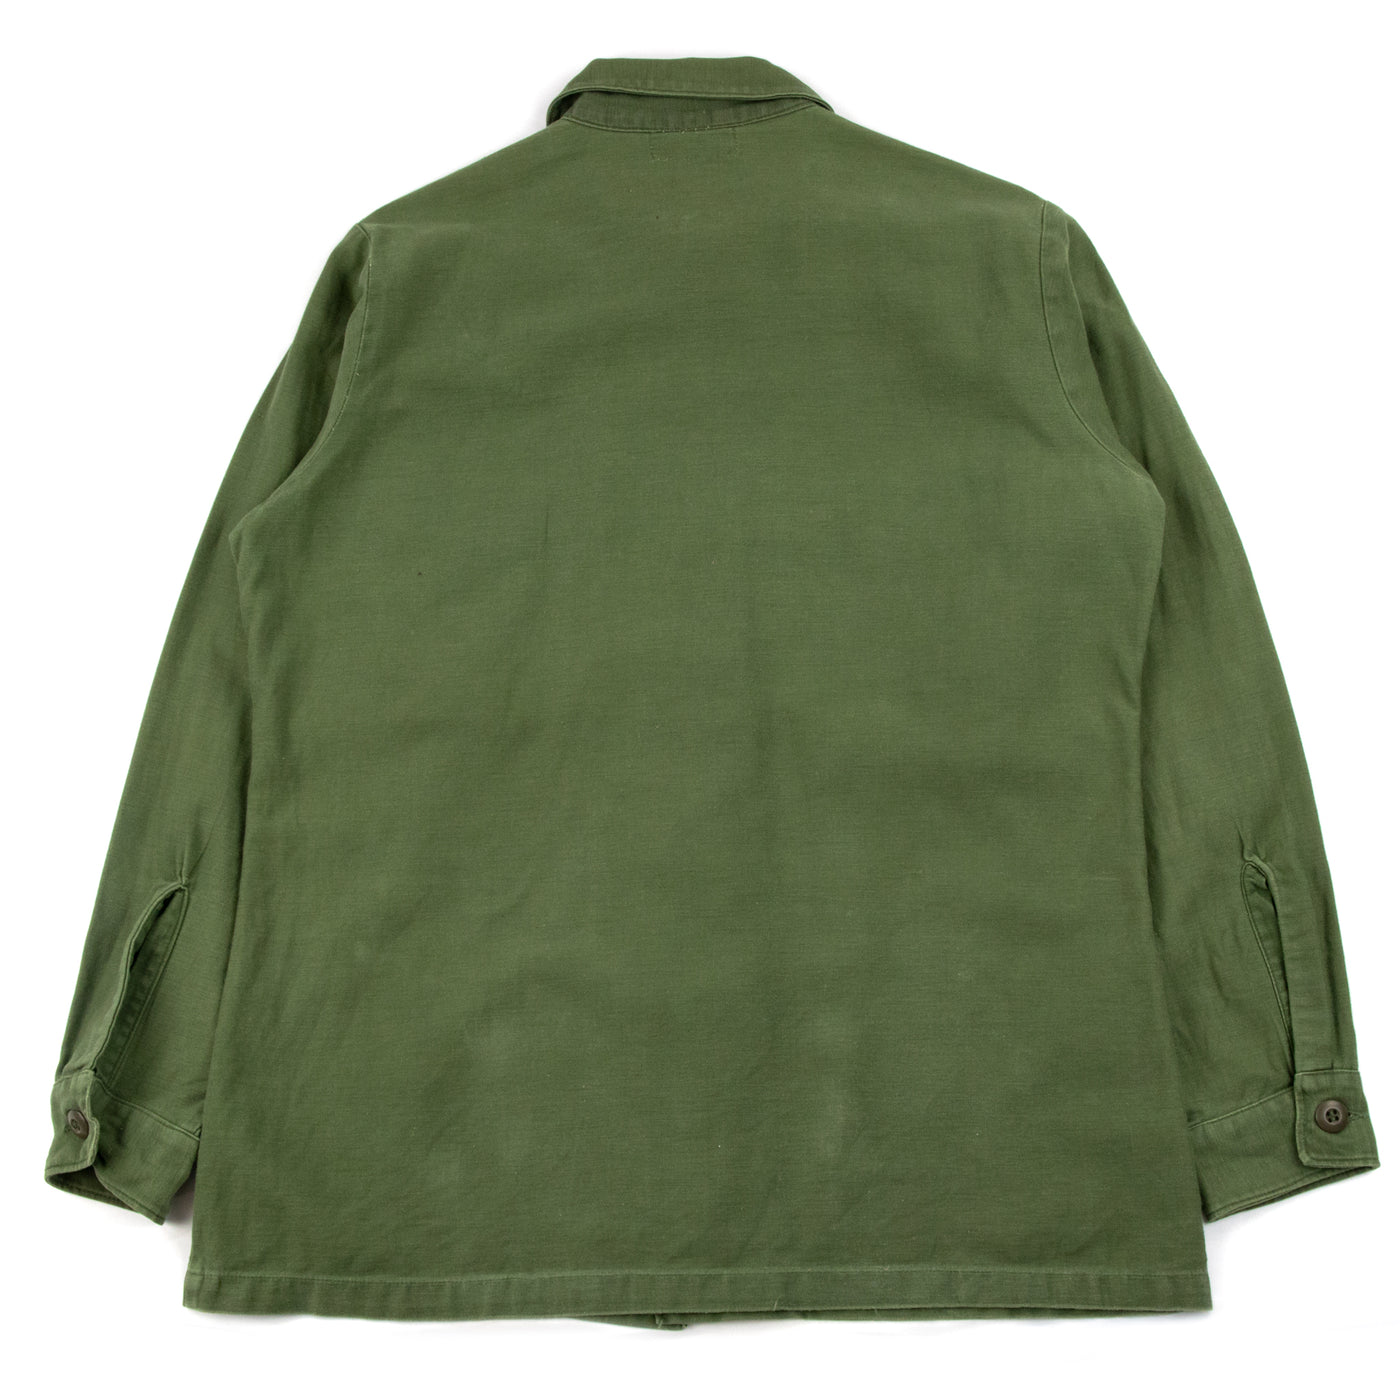 Vintage 60s USMC Vietnam Era Man's Cotton Sateen Army Green 107 Military Shirt S / M BACK